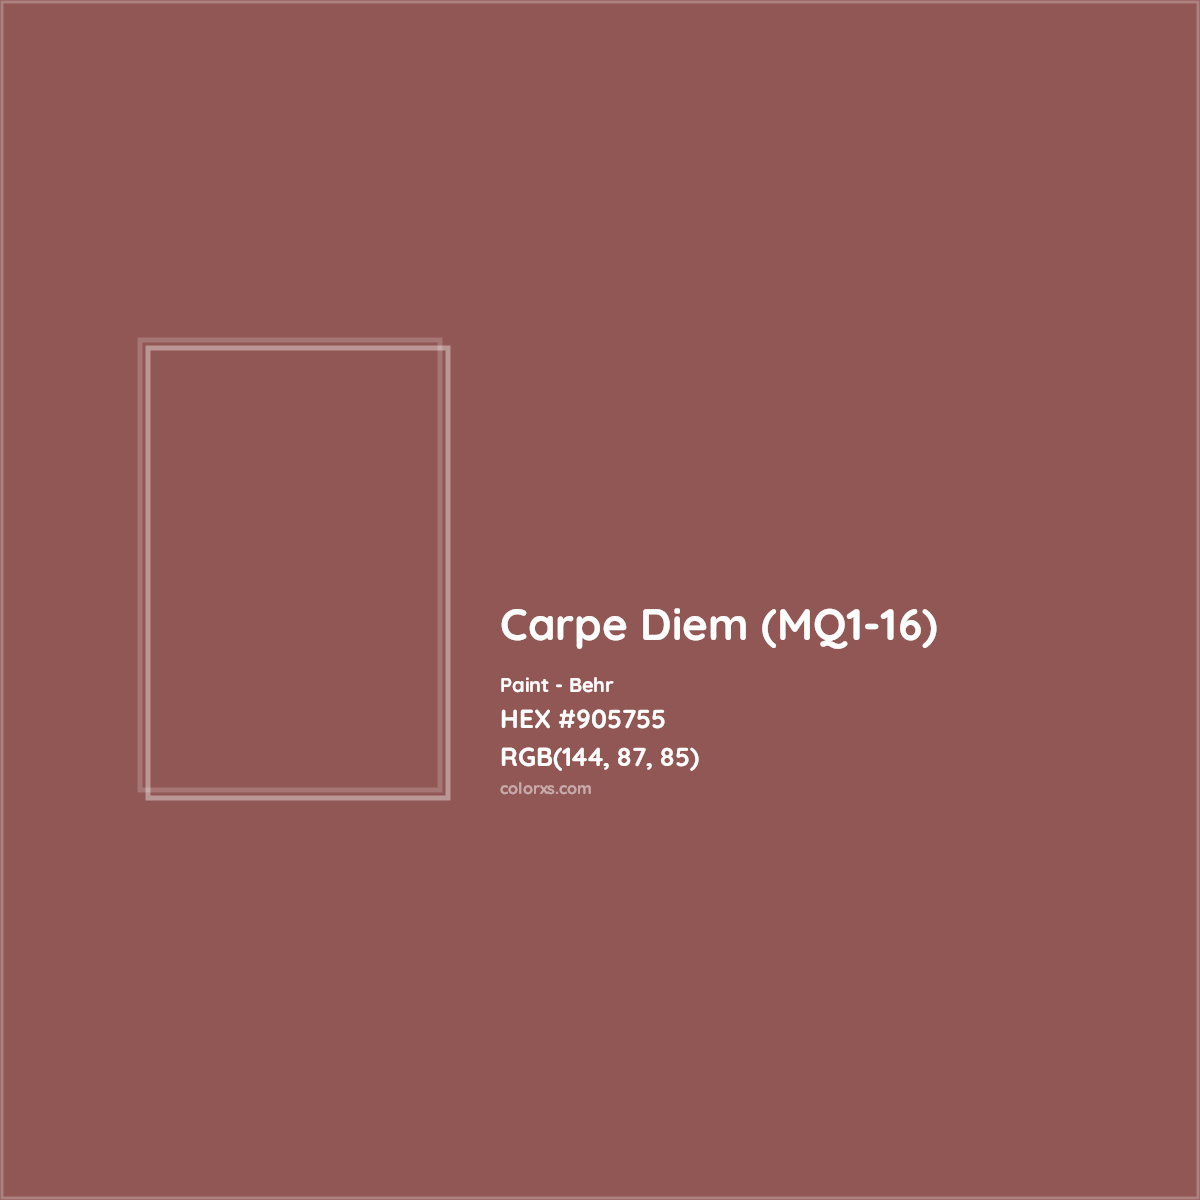 HEX #905755 Carpe Diem (MQ1-16) Paint Behr - Color Code